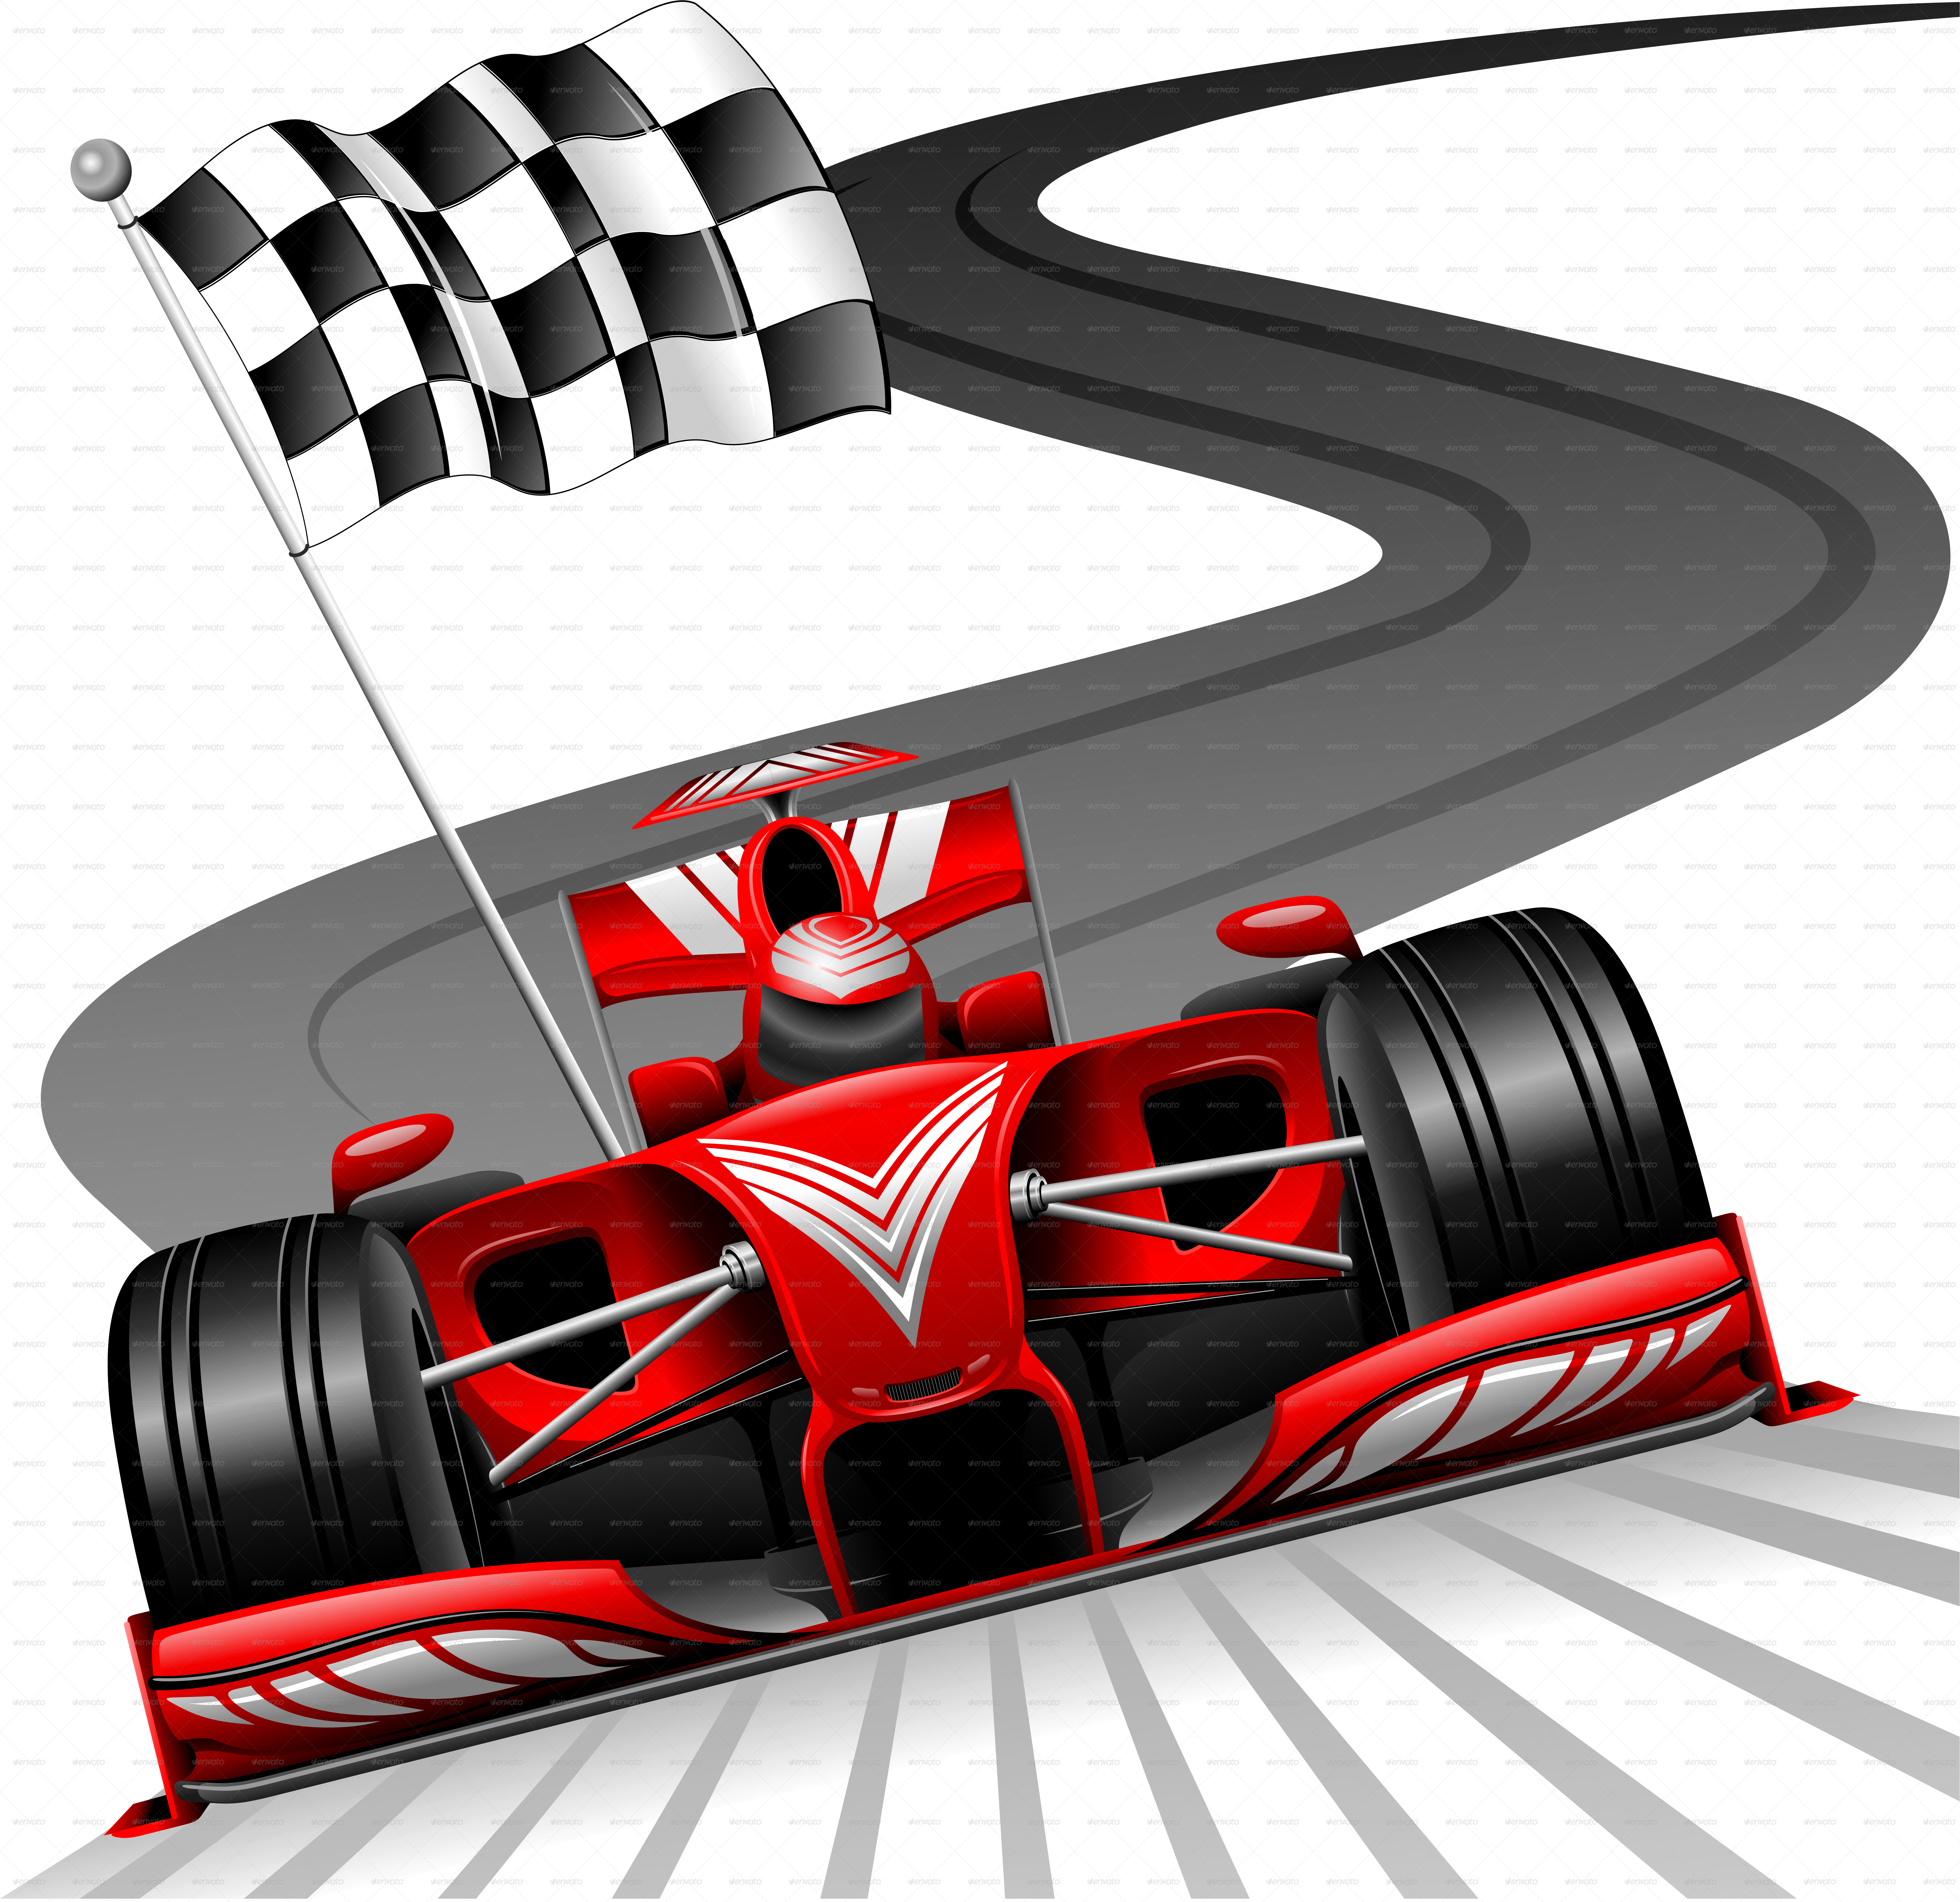 Formula 1 Red Car on Race Track by Bluedarkat | GraphicRiver